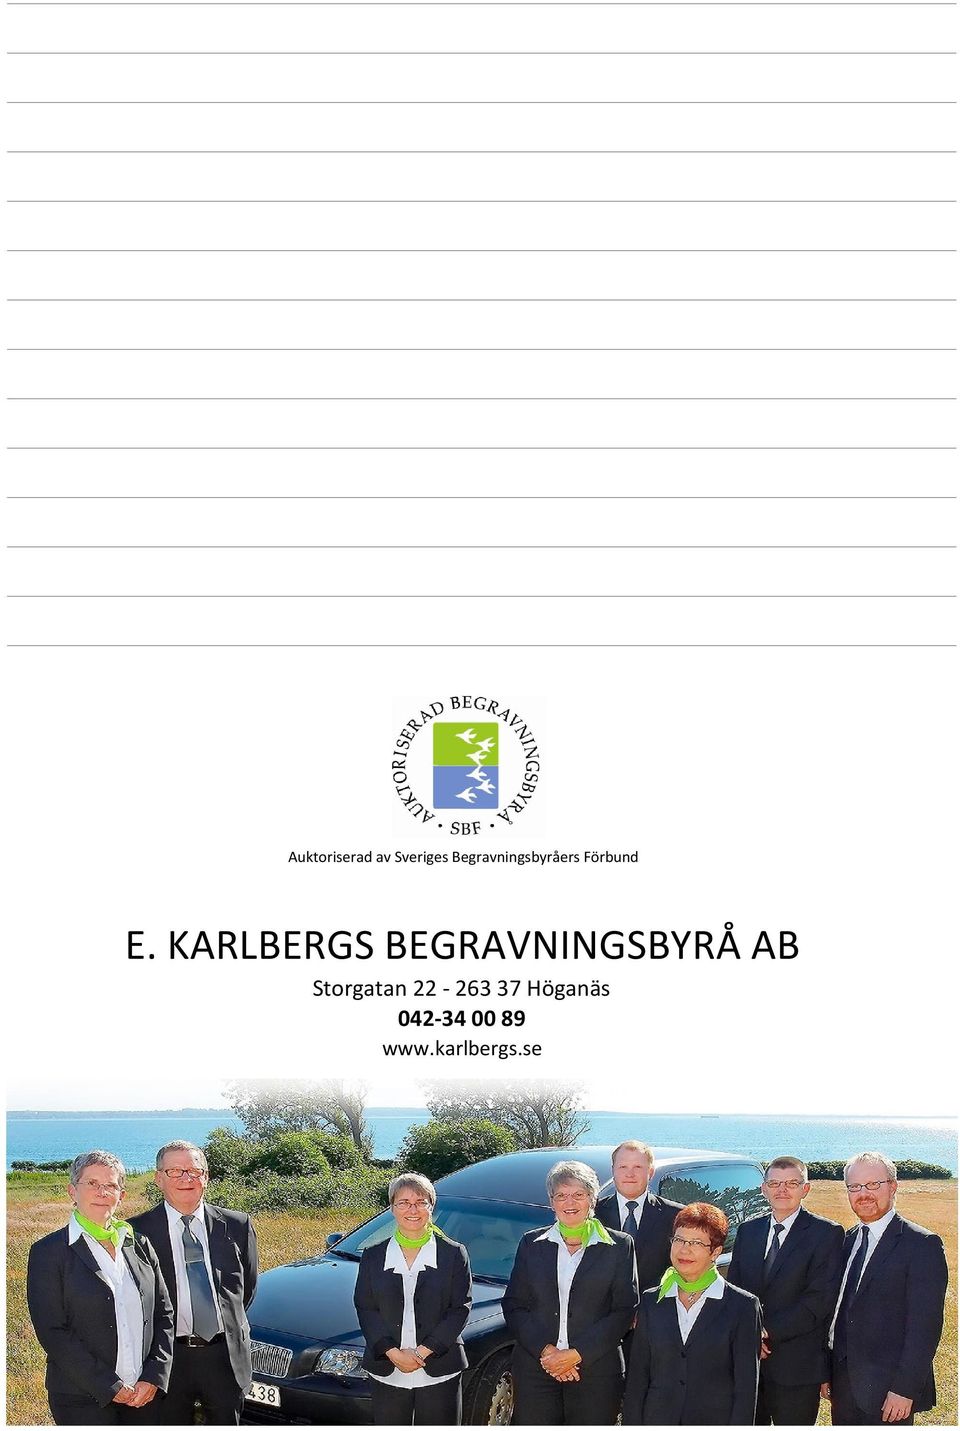 KARLBERGS BEGRAVNINGSBYRÅ AB